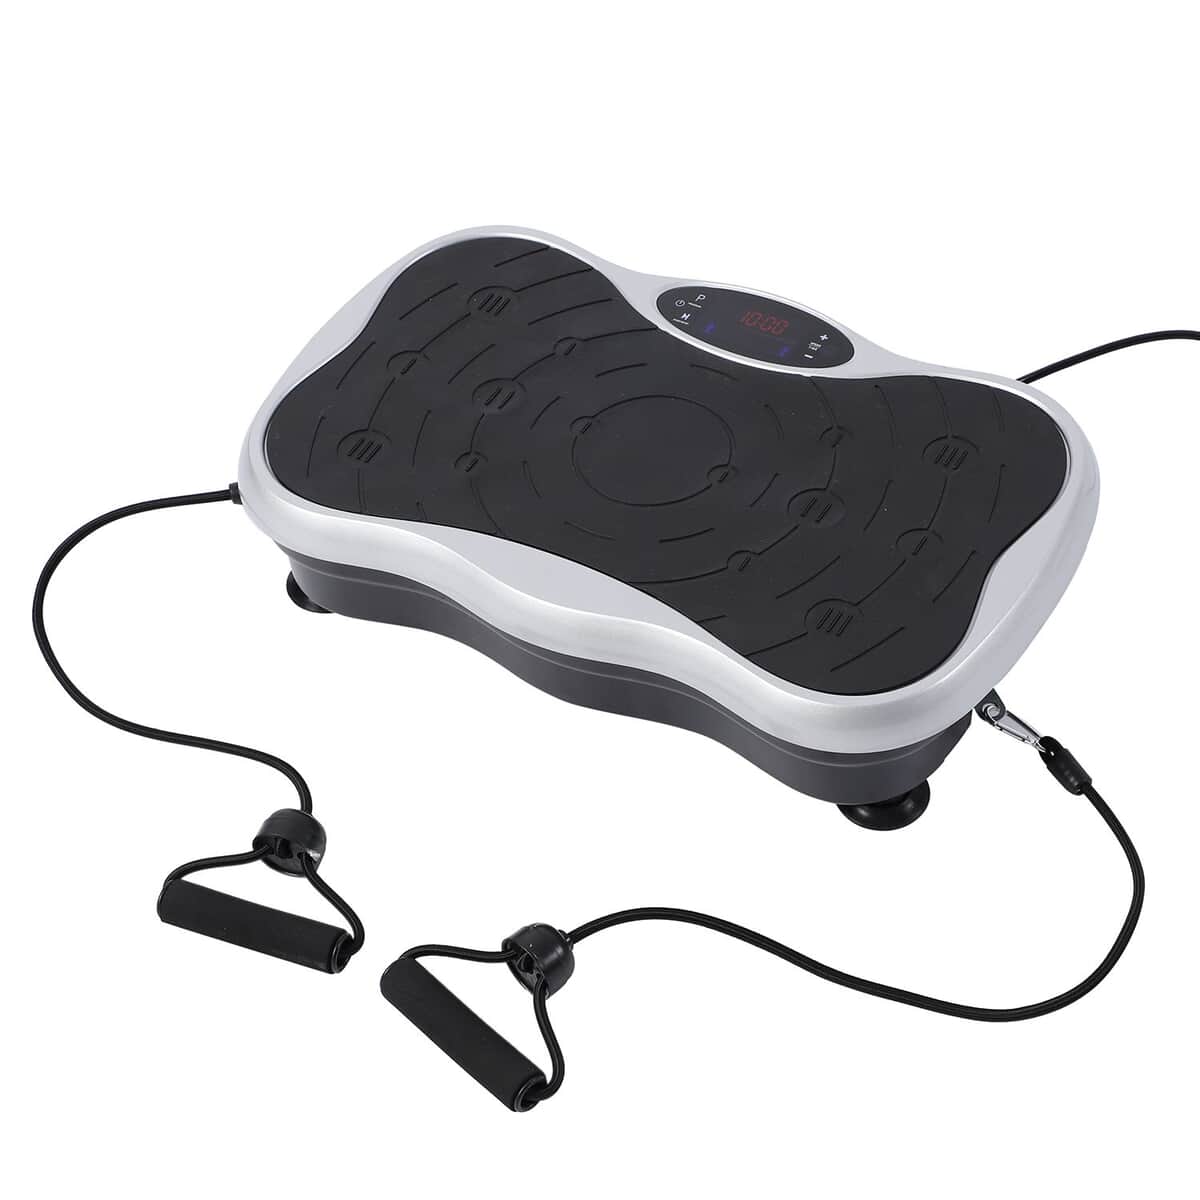 SoulSmart Whole Body Fitness Vibration Platform with Resistance Bands, Remote, & USB Speaker (200 W) White image number 0